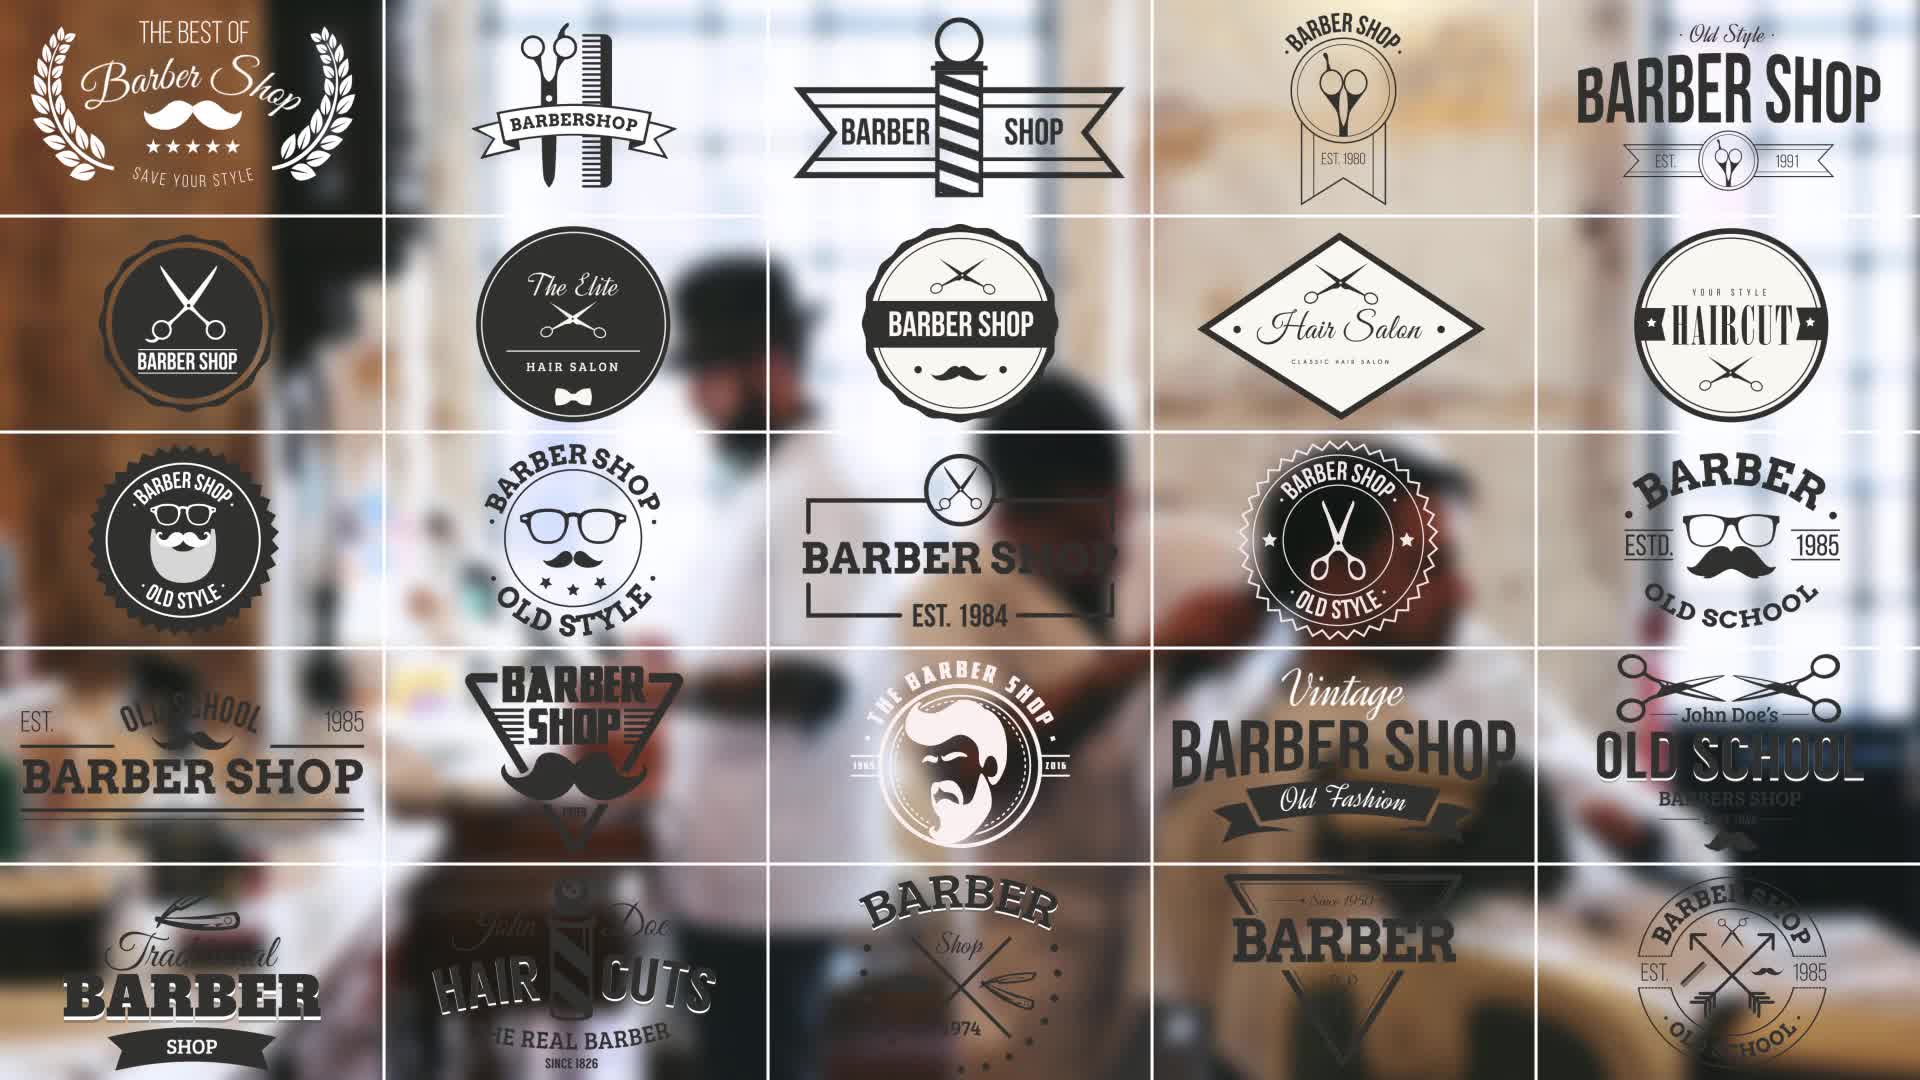 Barbershop Badges - Download Videohive 15166956